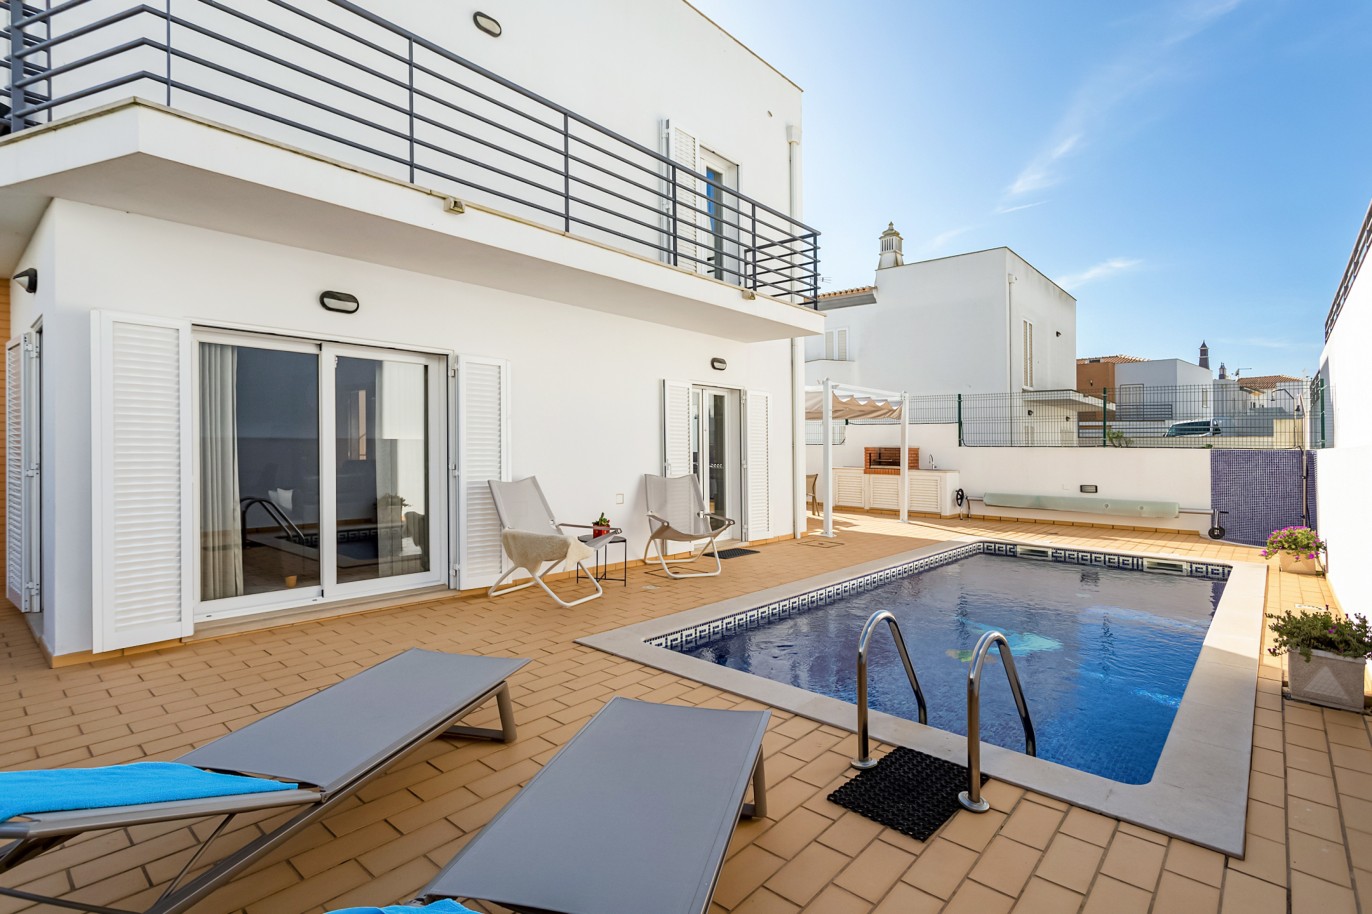 4 bedroom detached villa with pool for sale in Albufeira, Algarve_214369